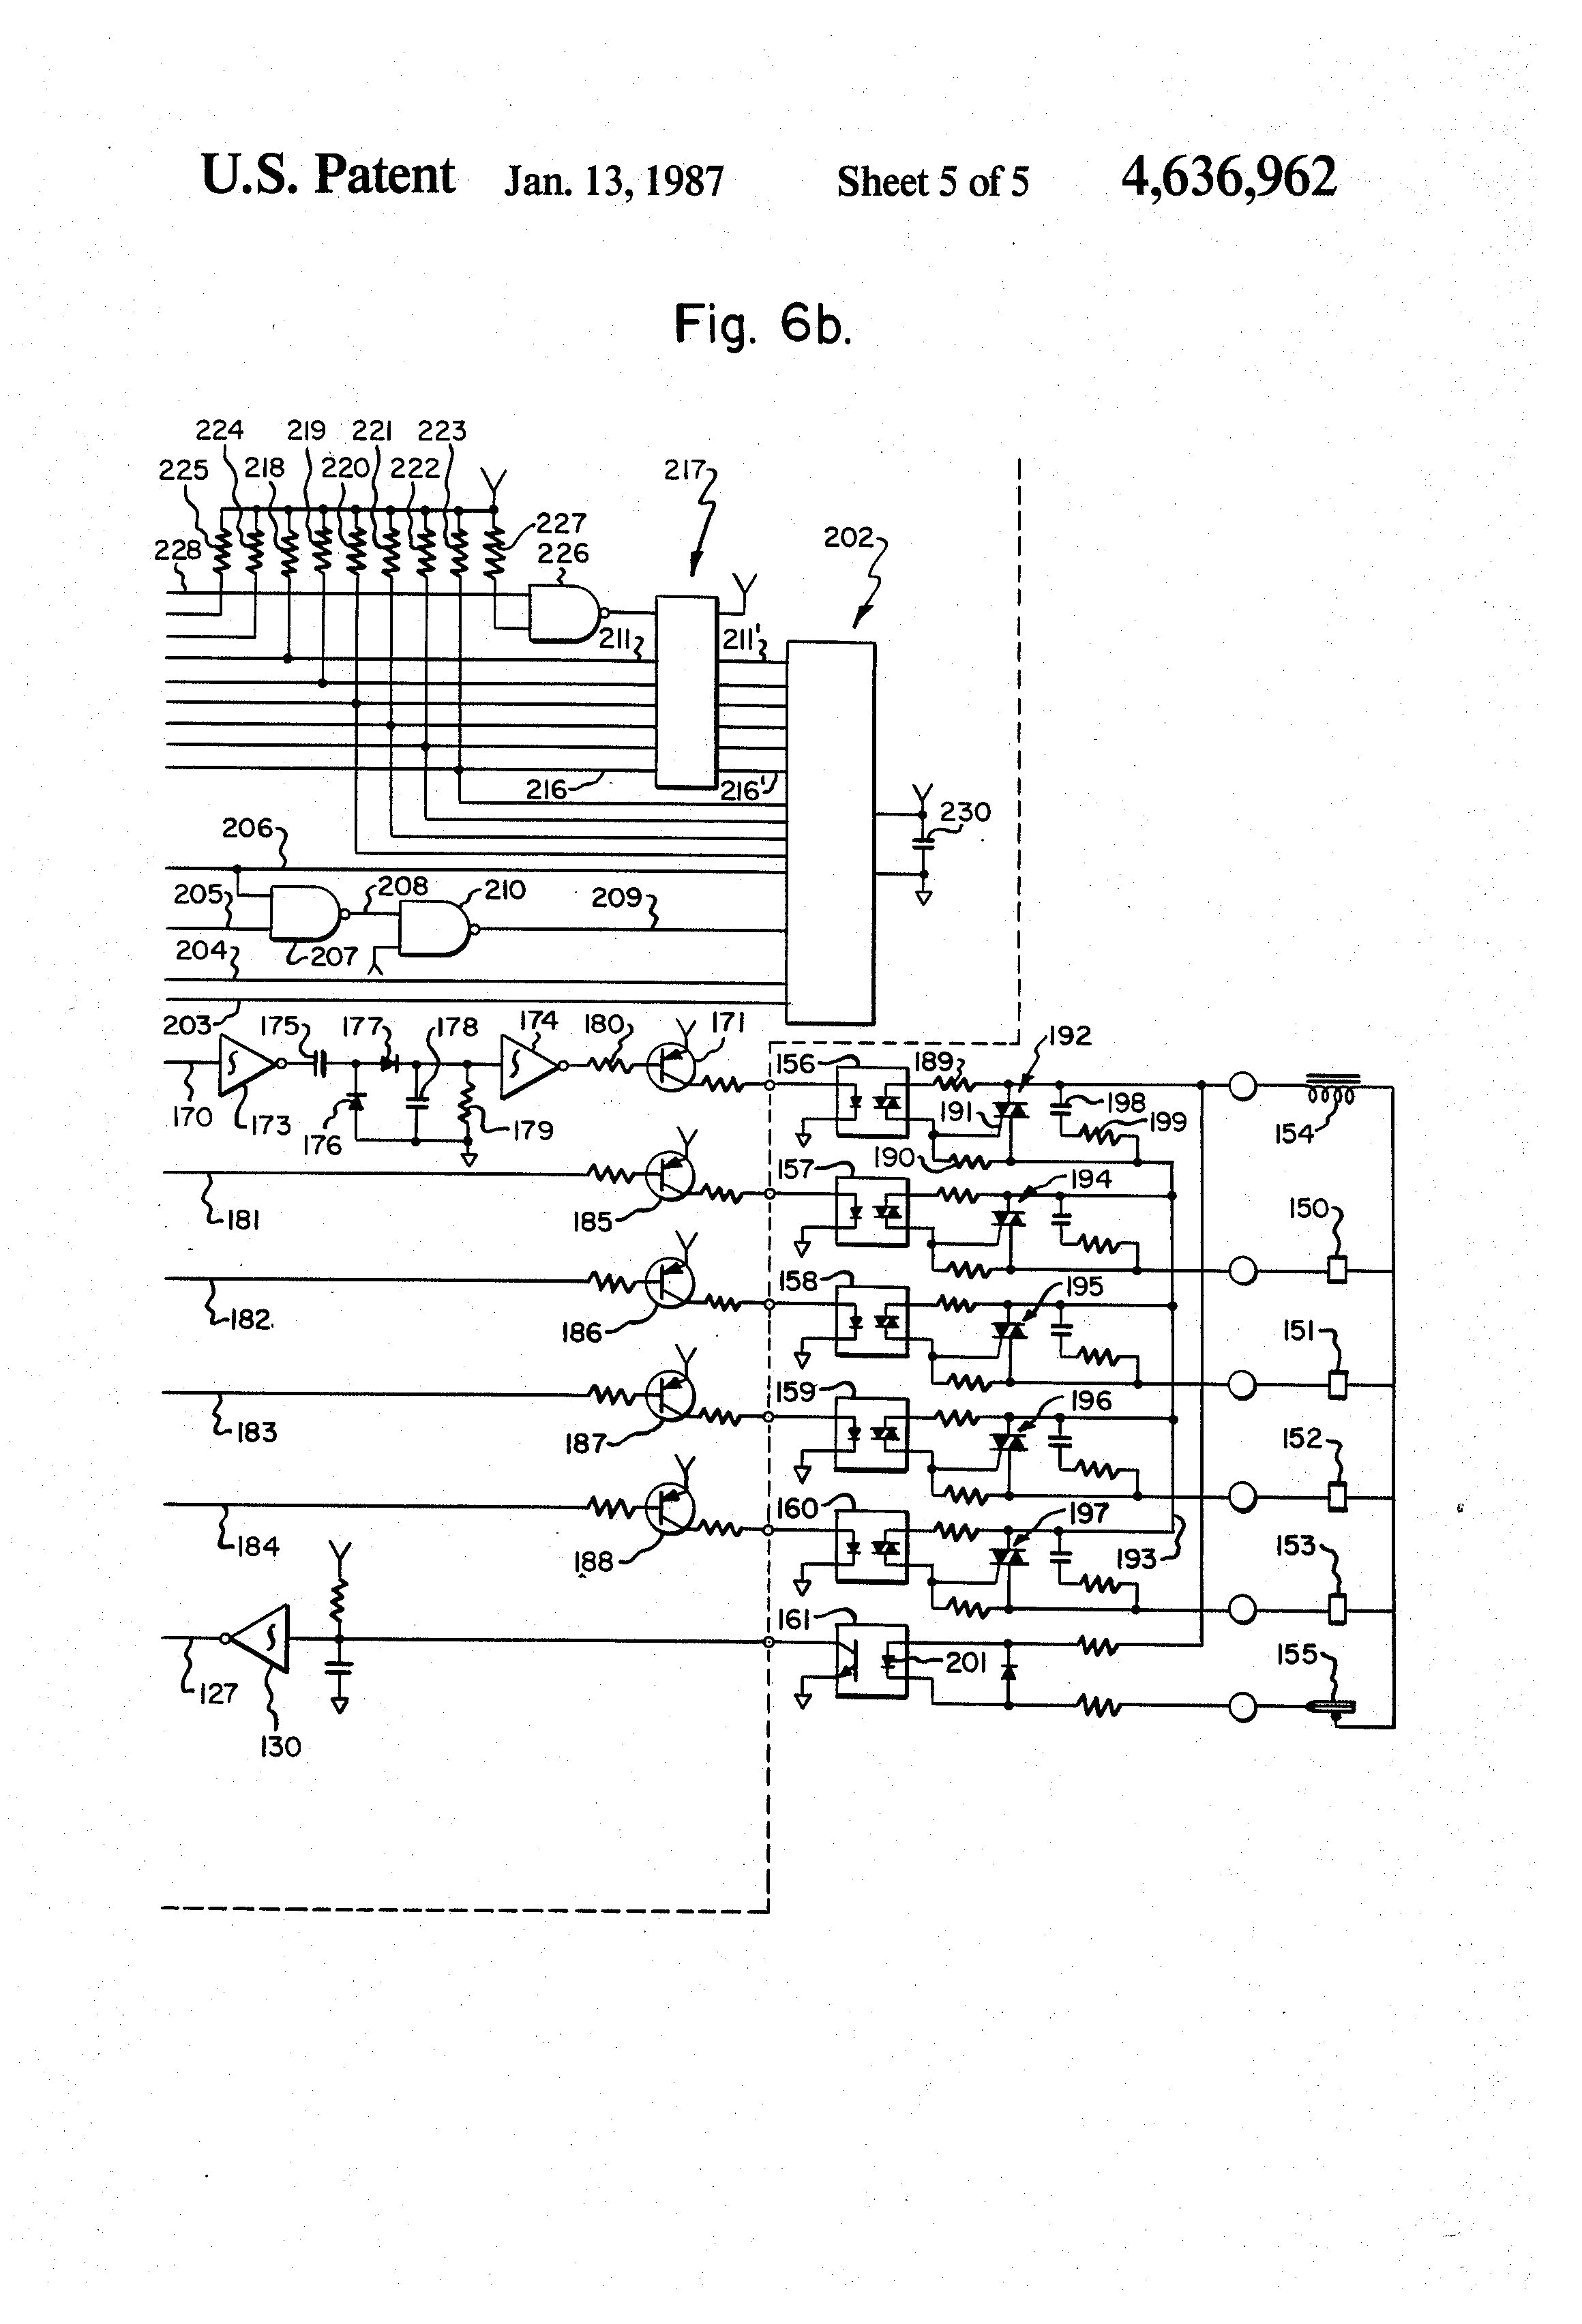 abb vfd wiring diagram wiring diagram image abb vfd drive wiring diagram abb drive wiring diagram